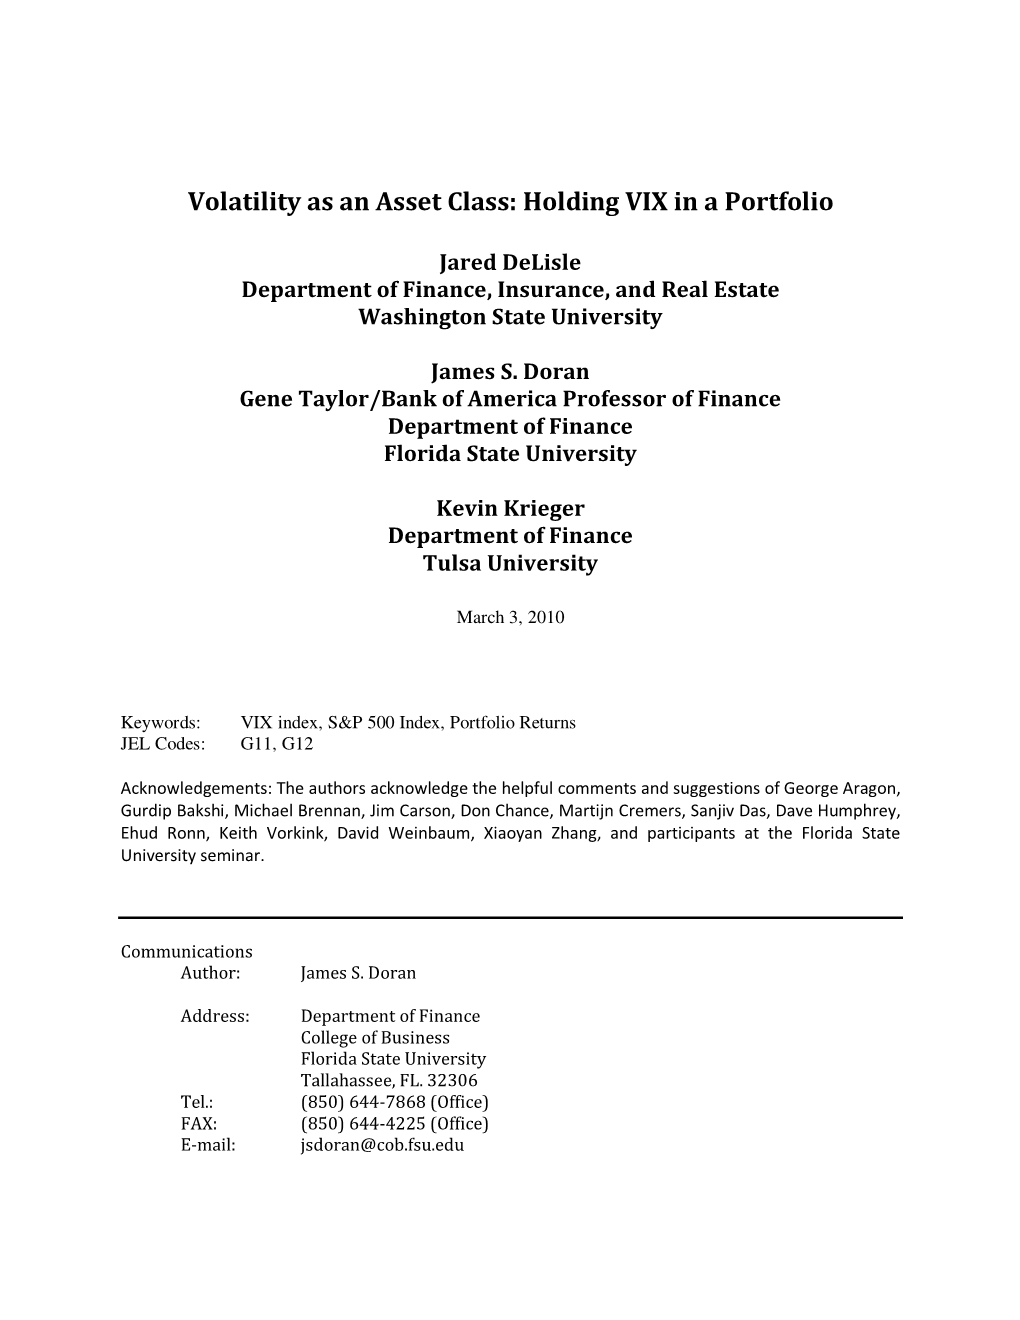 Volatility As an Asset Class: Holding VIX in a Portfolio